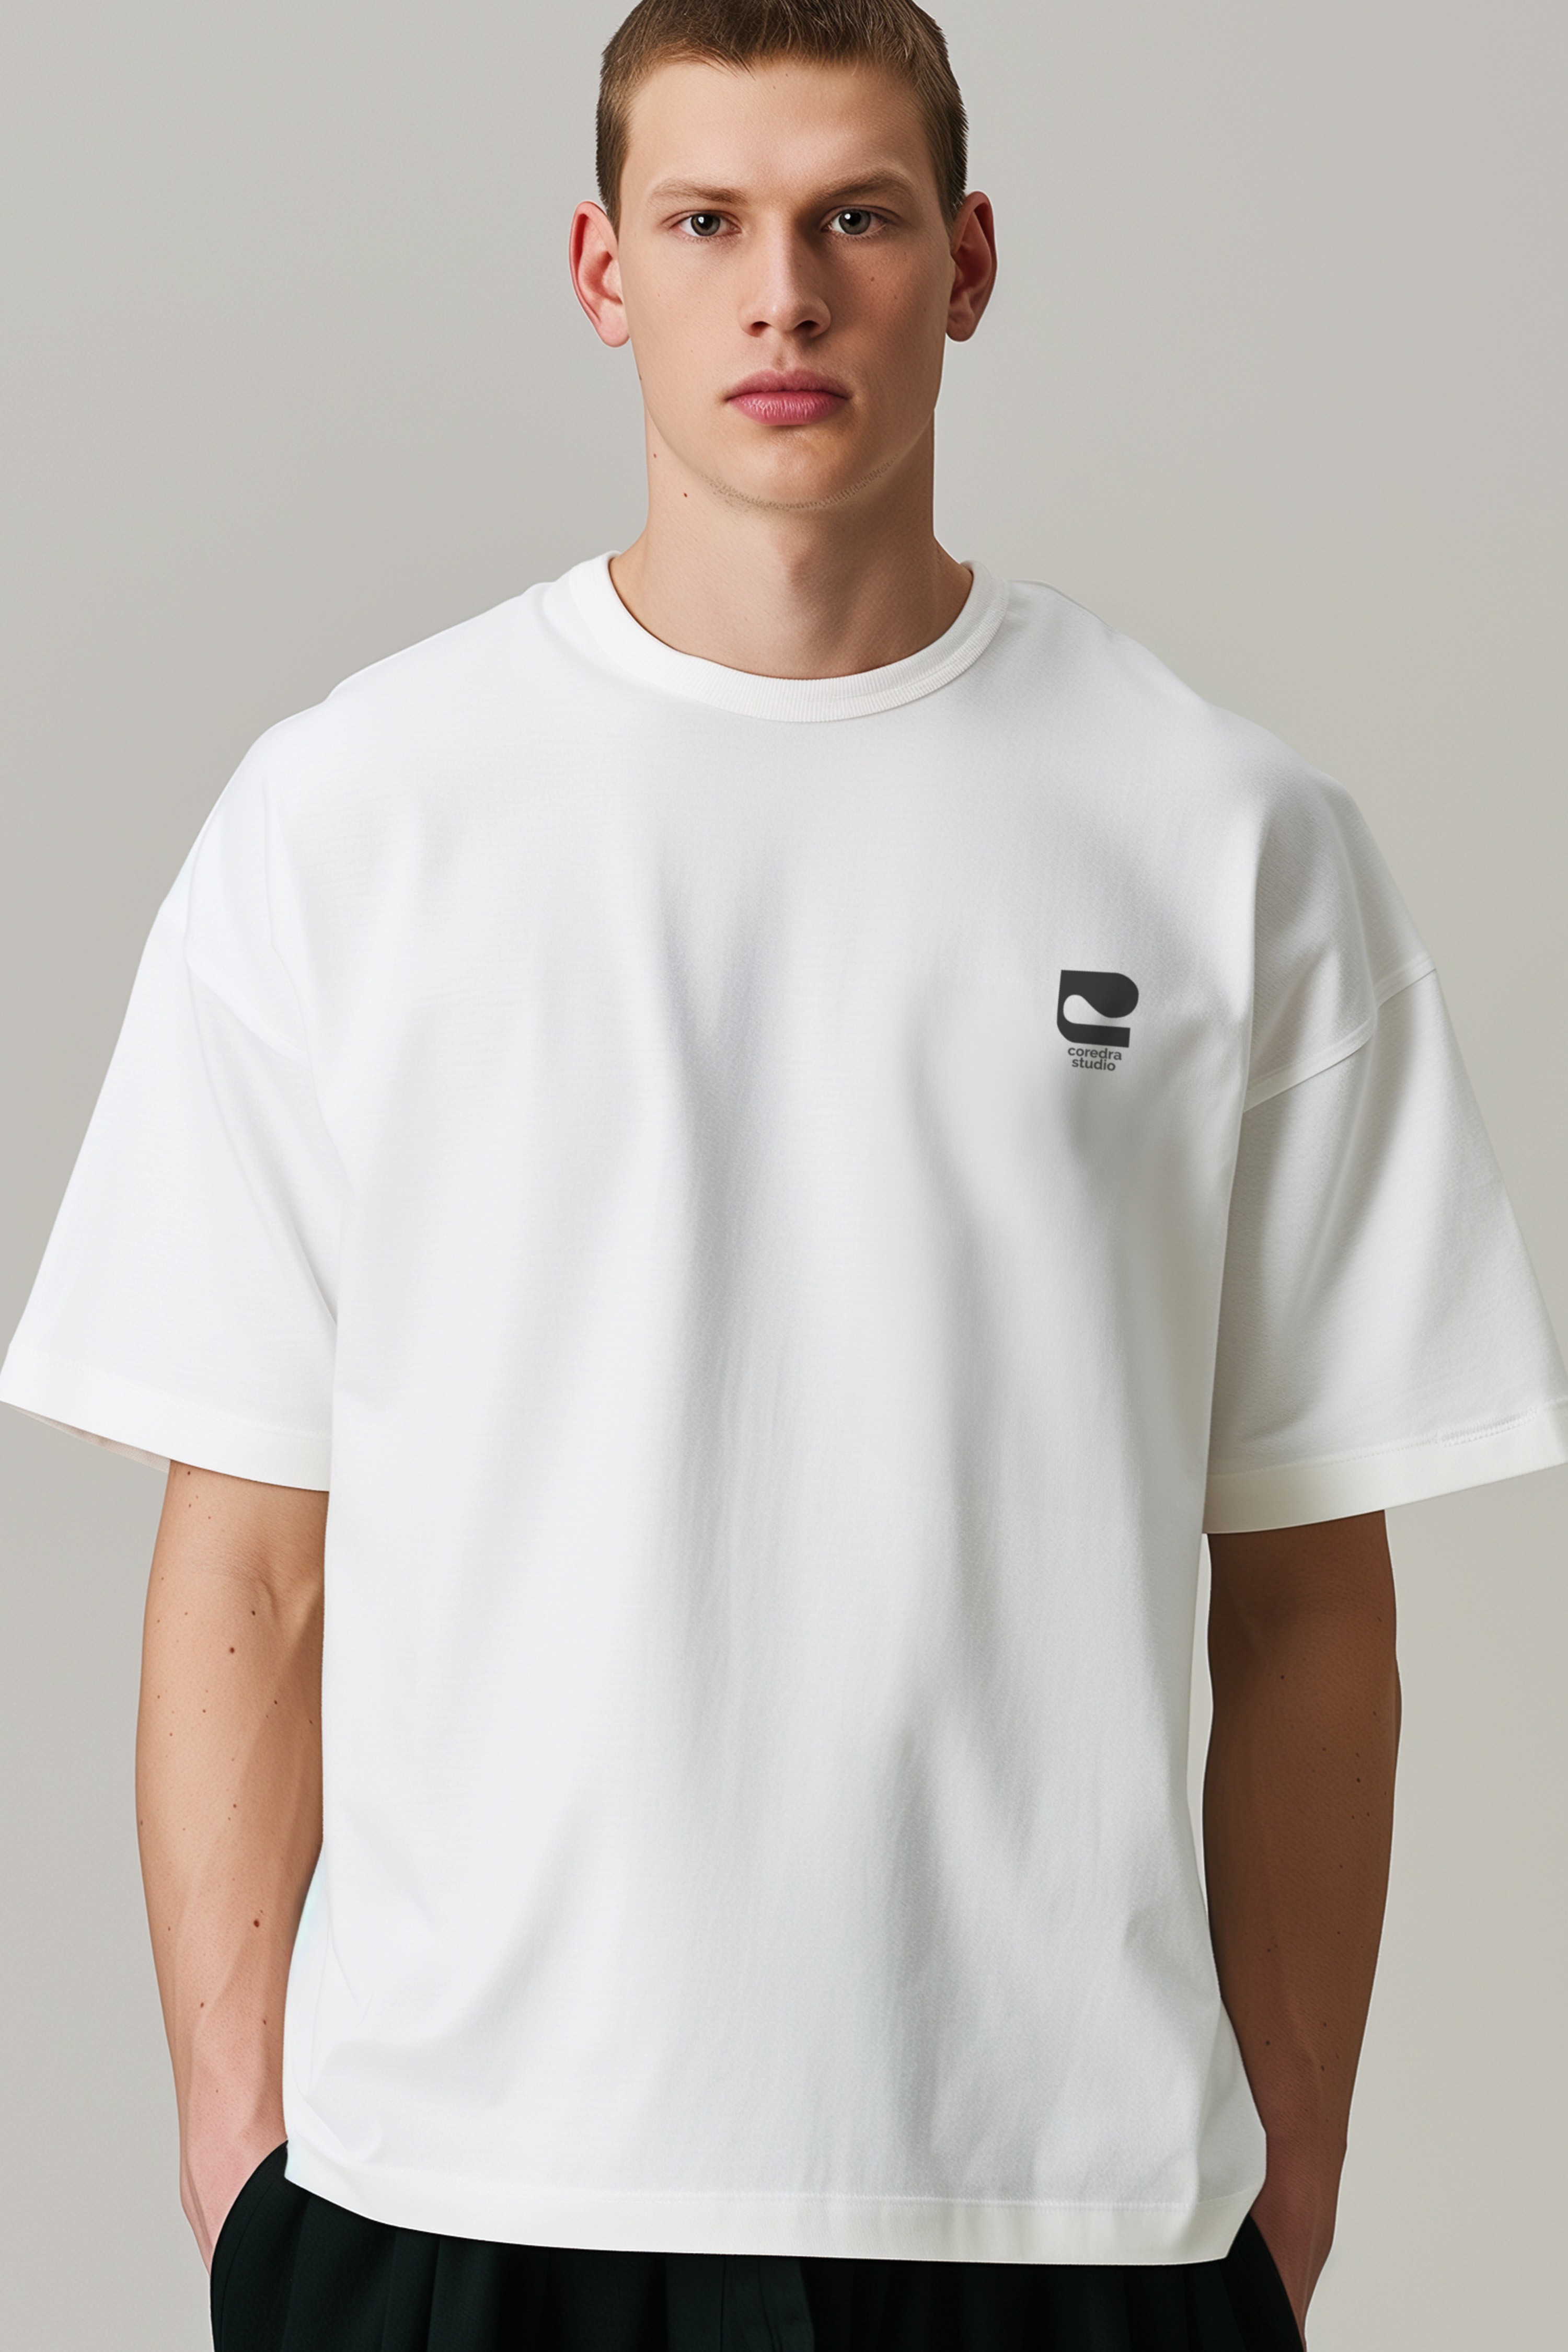 Self Love Oversize T-Shirt Erkek - Beyaz